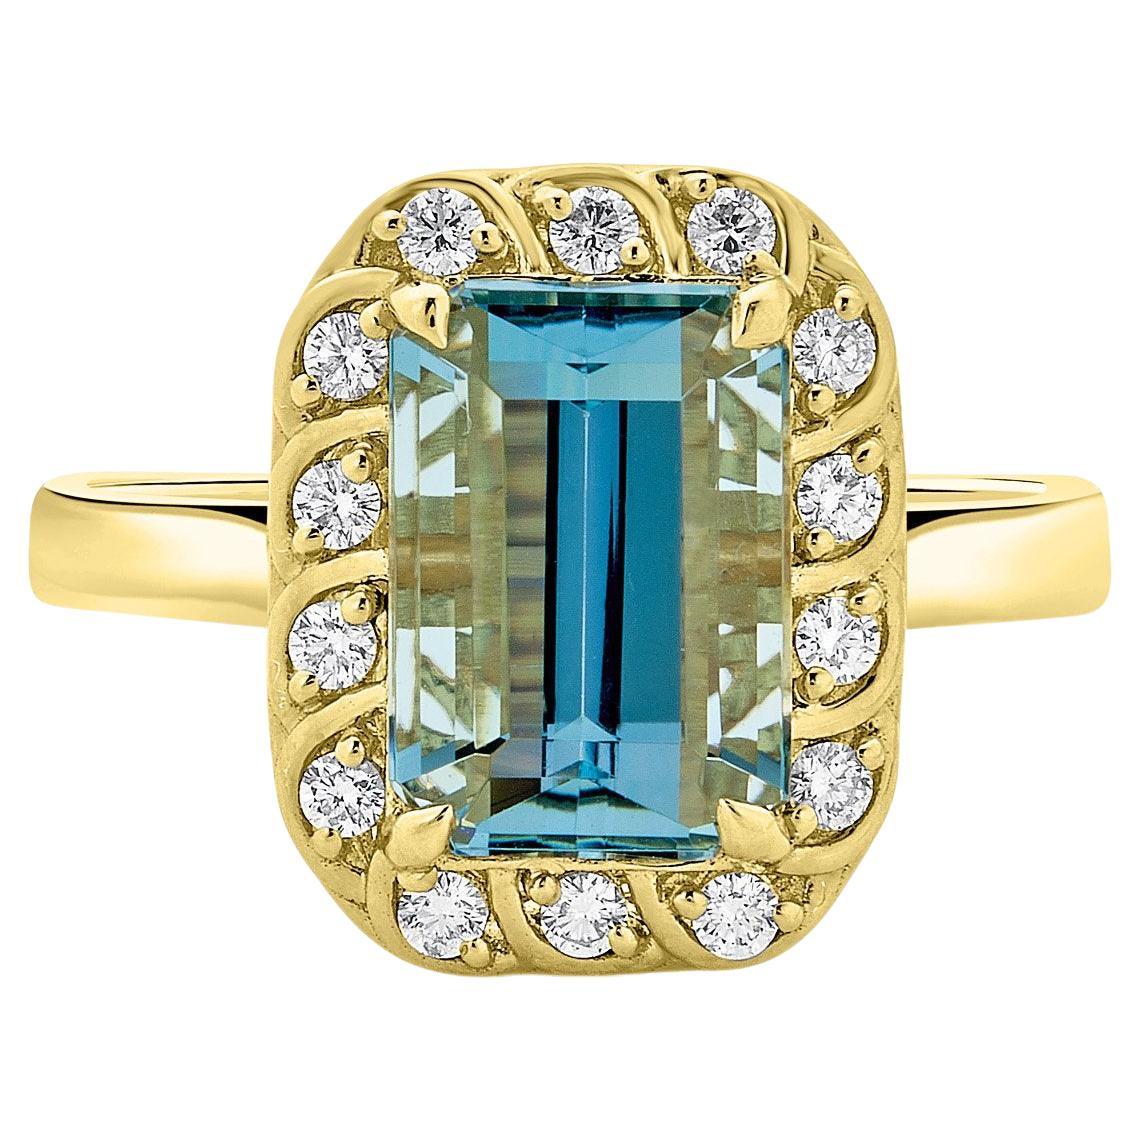 3.03ct Aquamarine Ring with 0.23tct Diamonds Set in 14k Yellow Gold